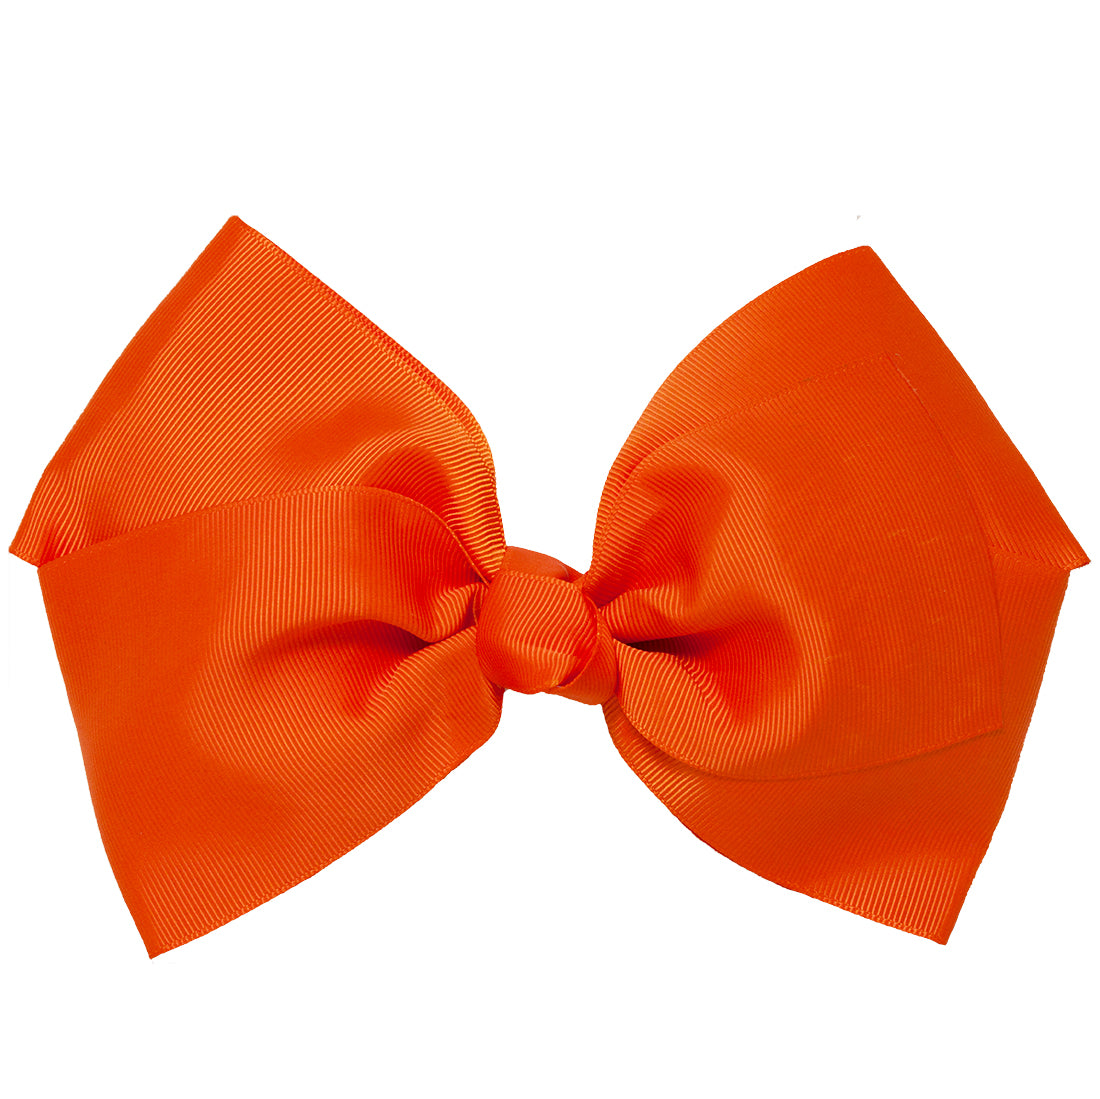 Mia Spirit Extra Large Grosgrain Bow Barrette - orange color - designed by #MiaKaminski of Mia Beauty